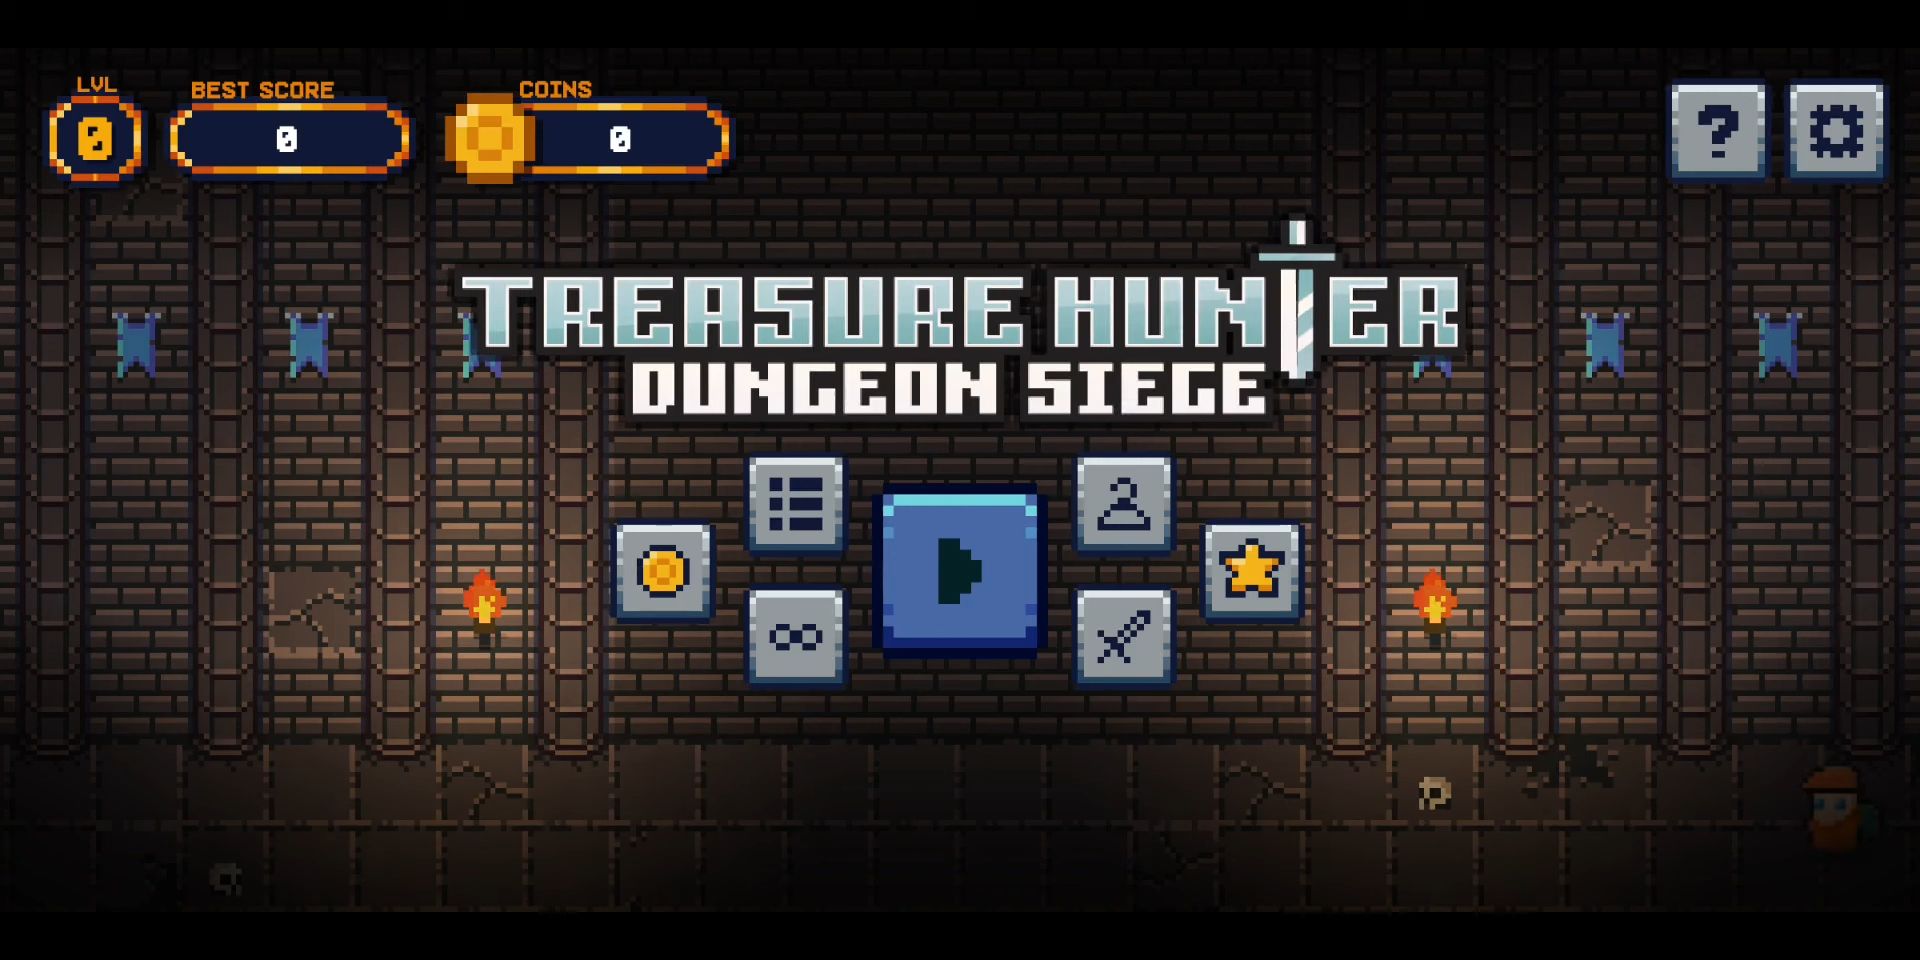 Descargar Treasure Hunter: Dungeon Siege gratis para Android.